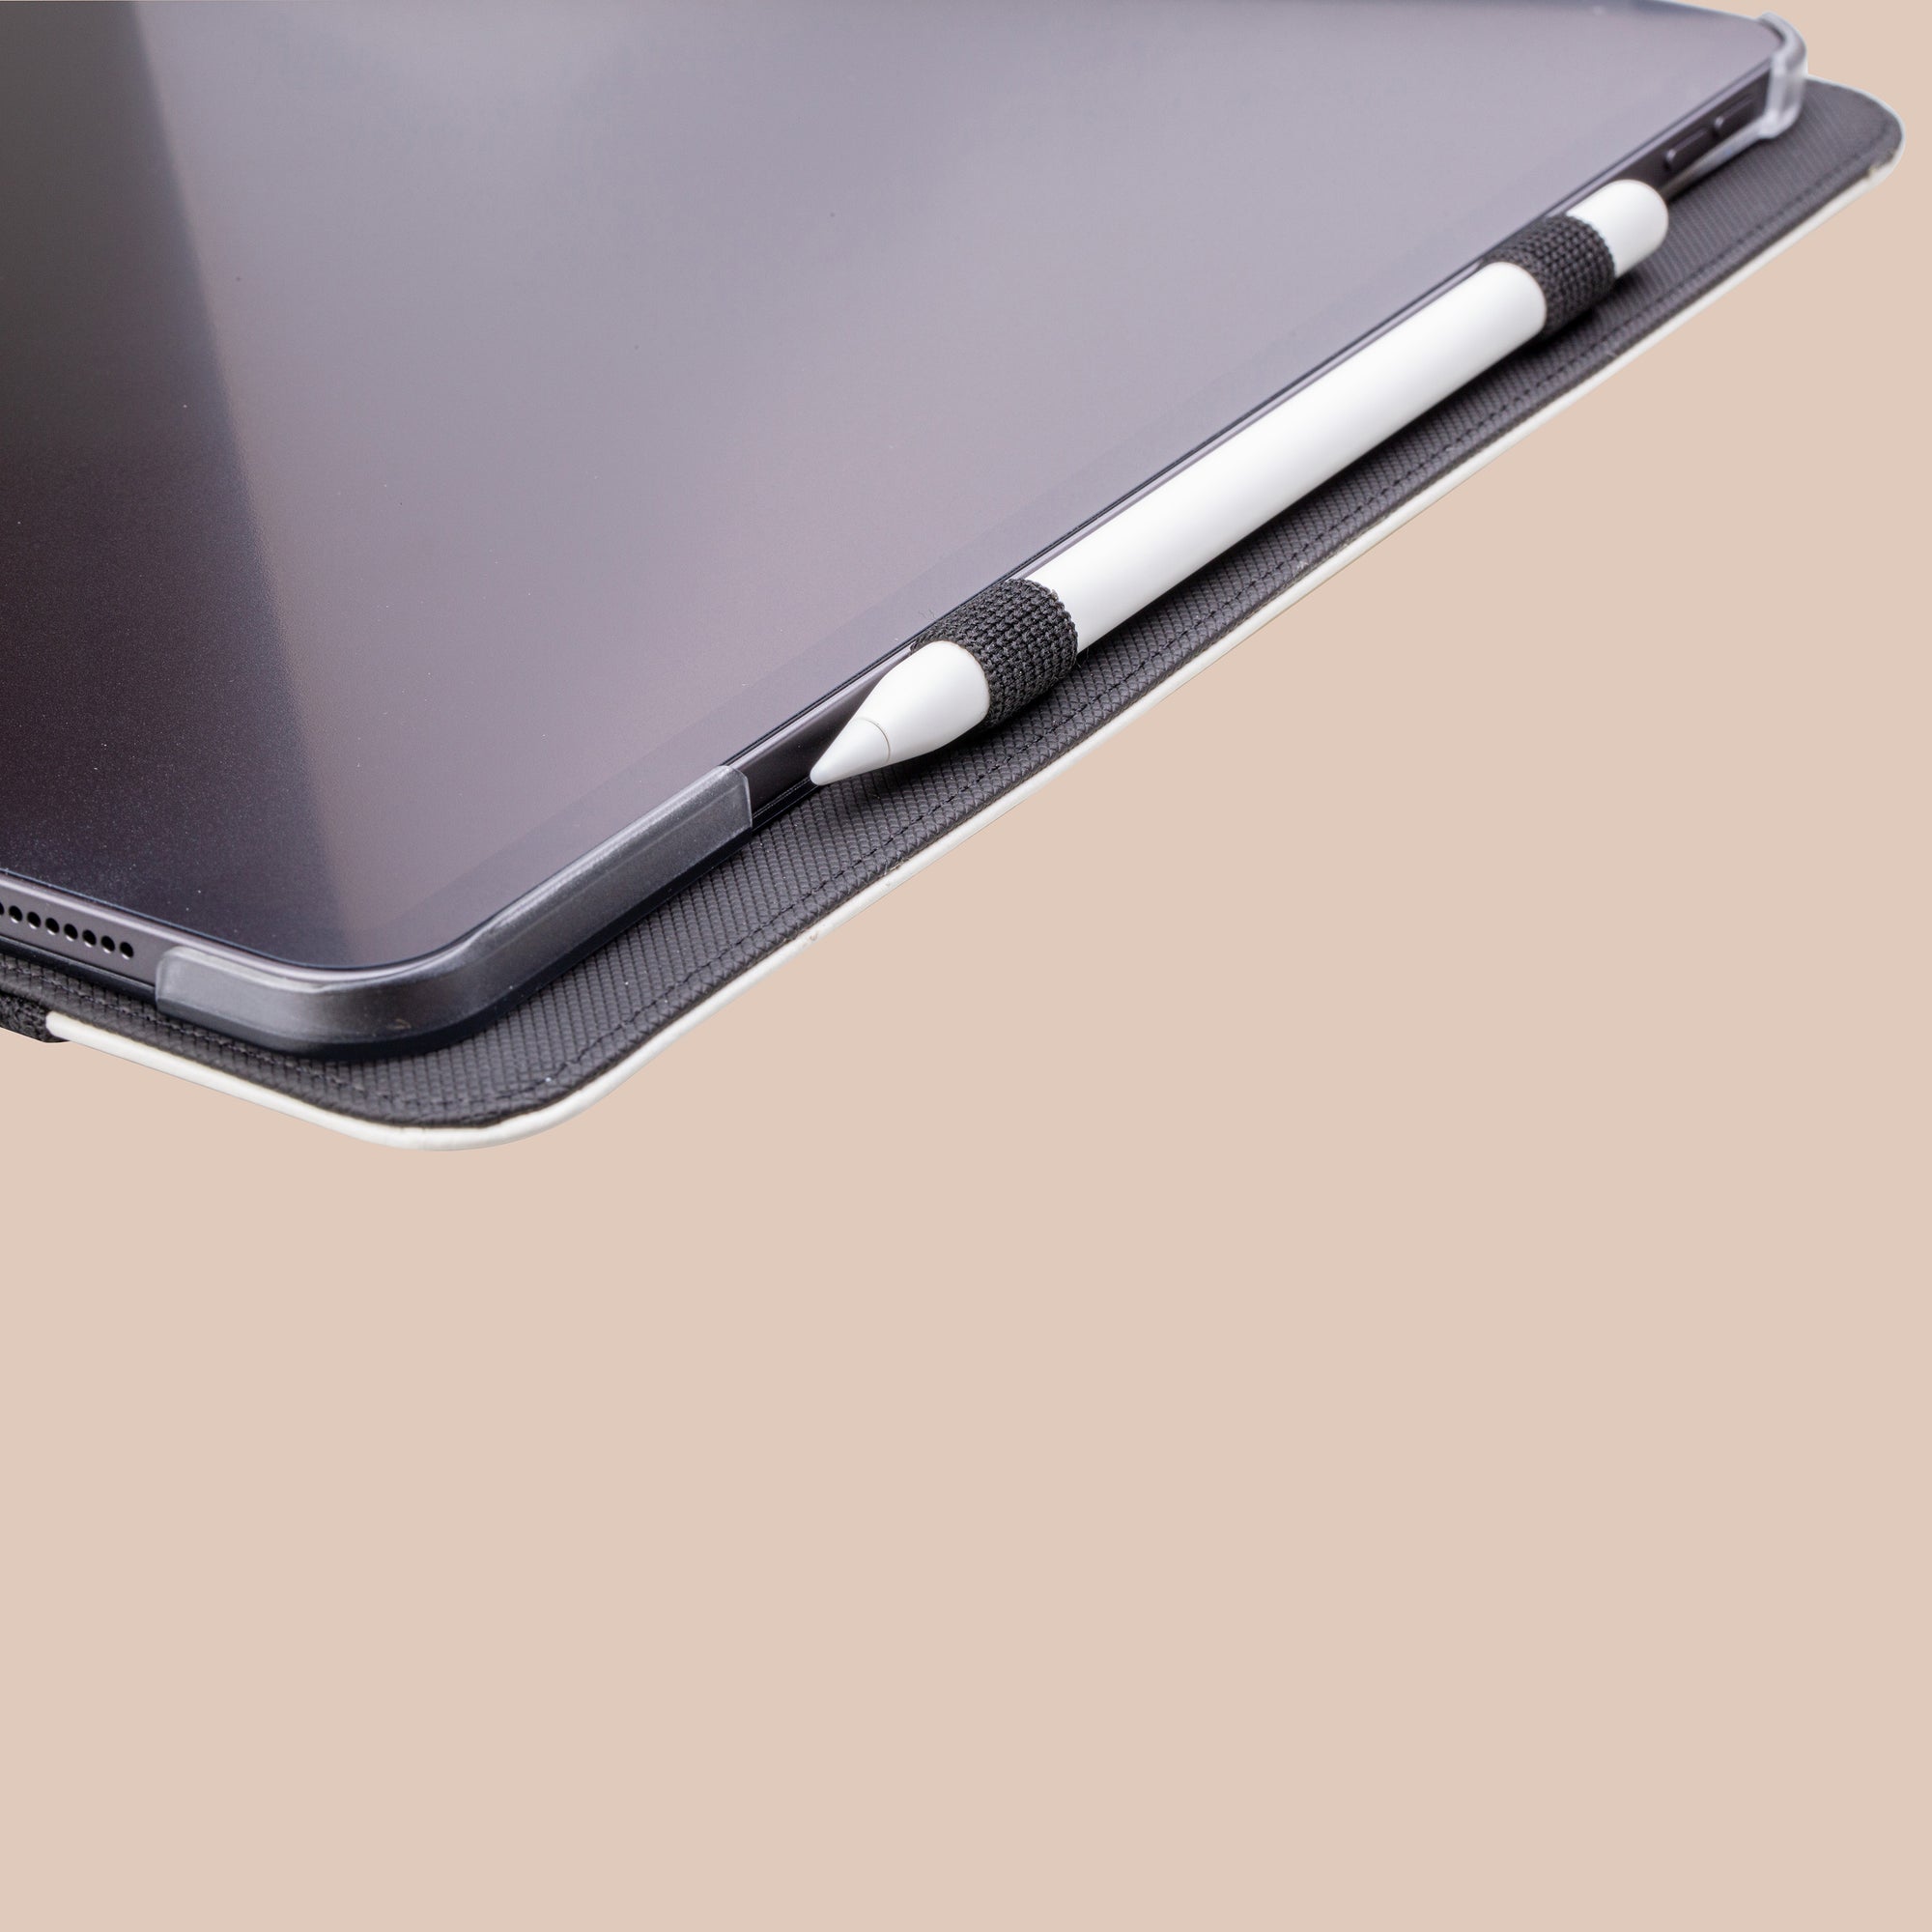 Topo Black iPad Pro Cases - SALAVISA